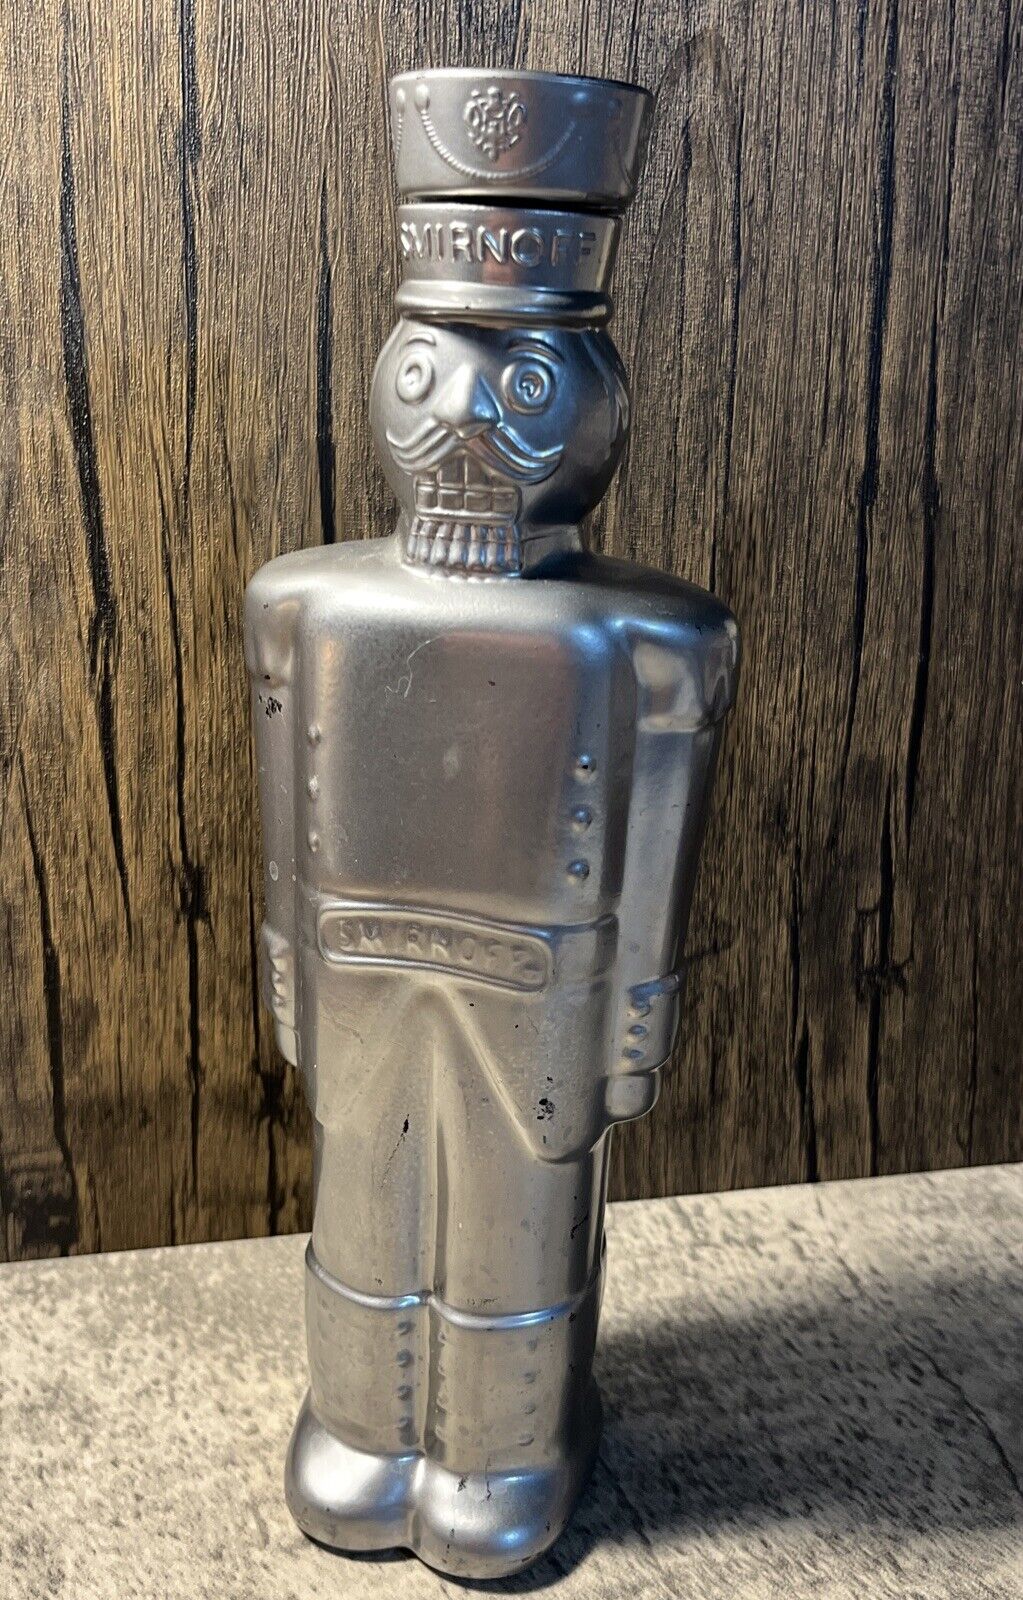 1998 Smirnoff Nutcracker Toy Soldier Glass Bottle/Decanter EMPTY Painted Silver